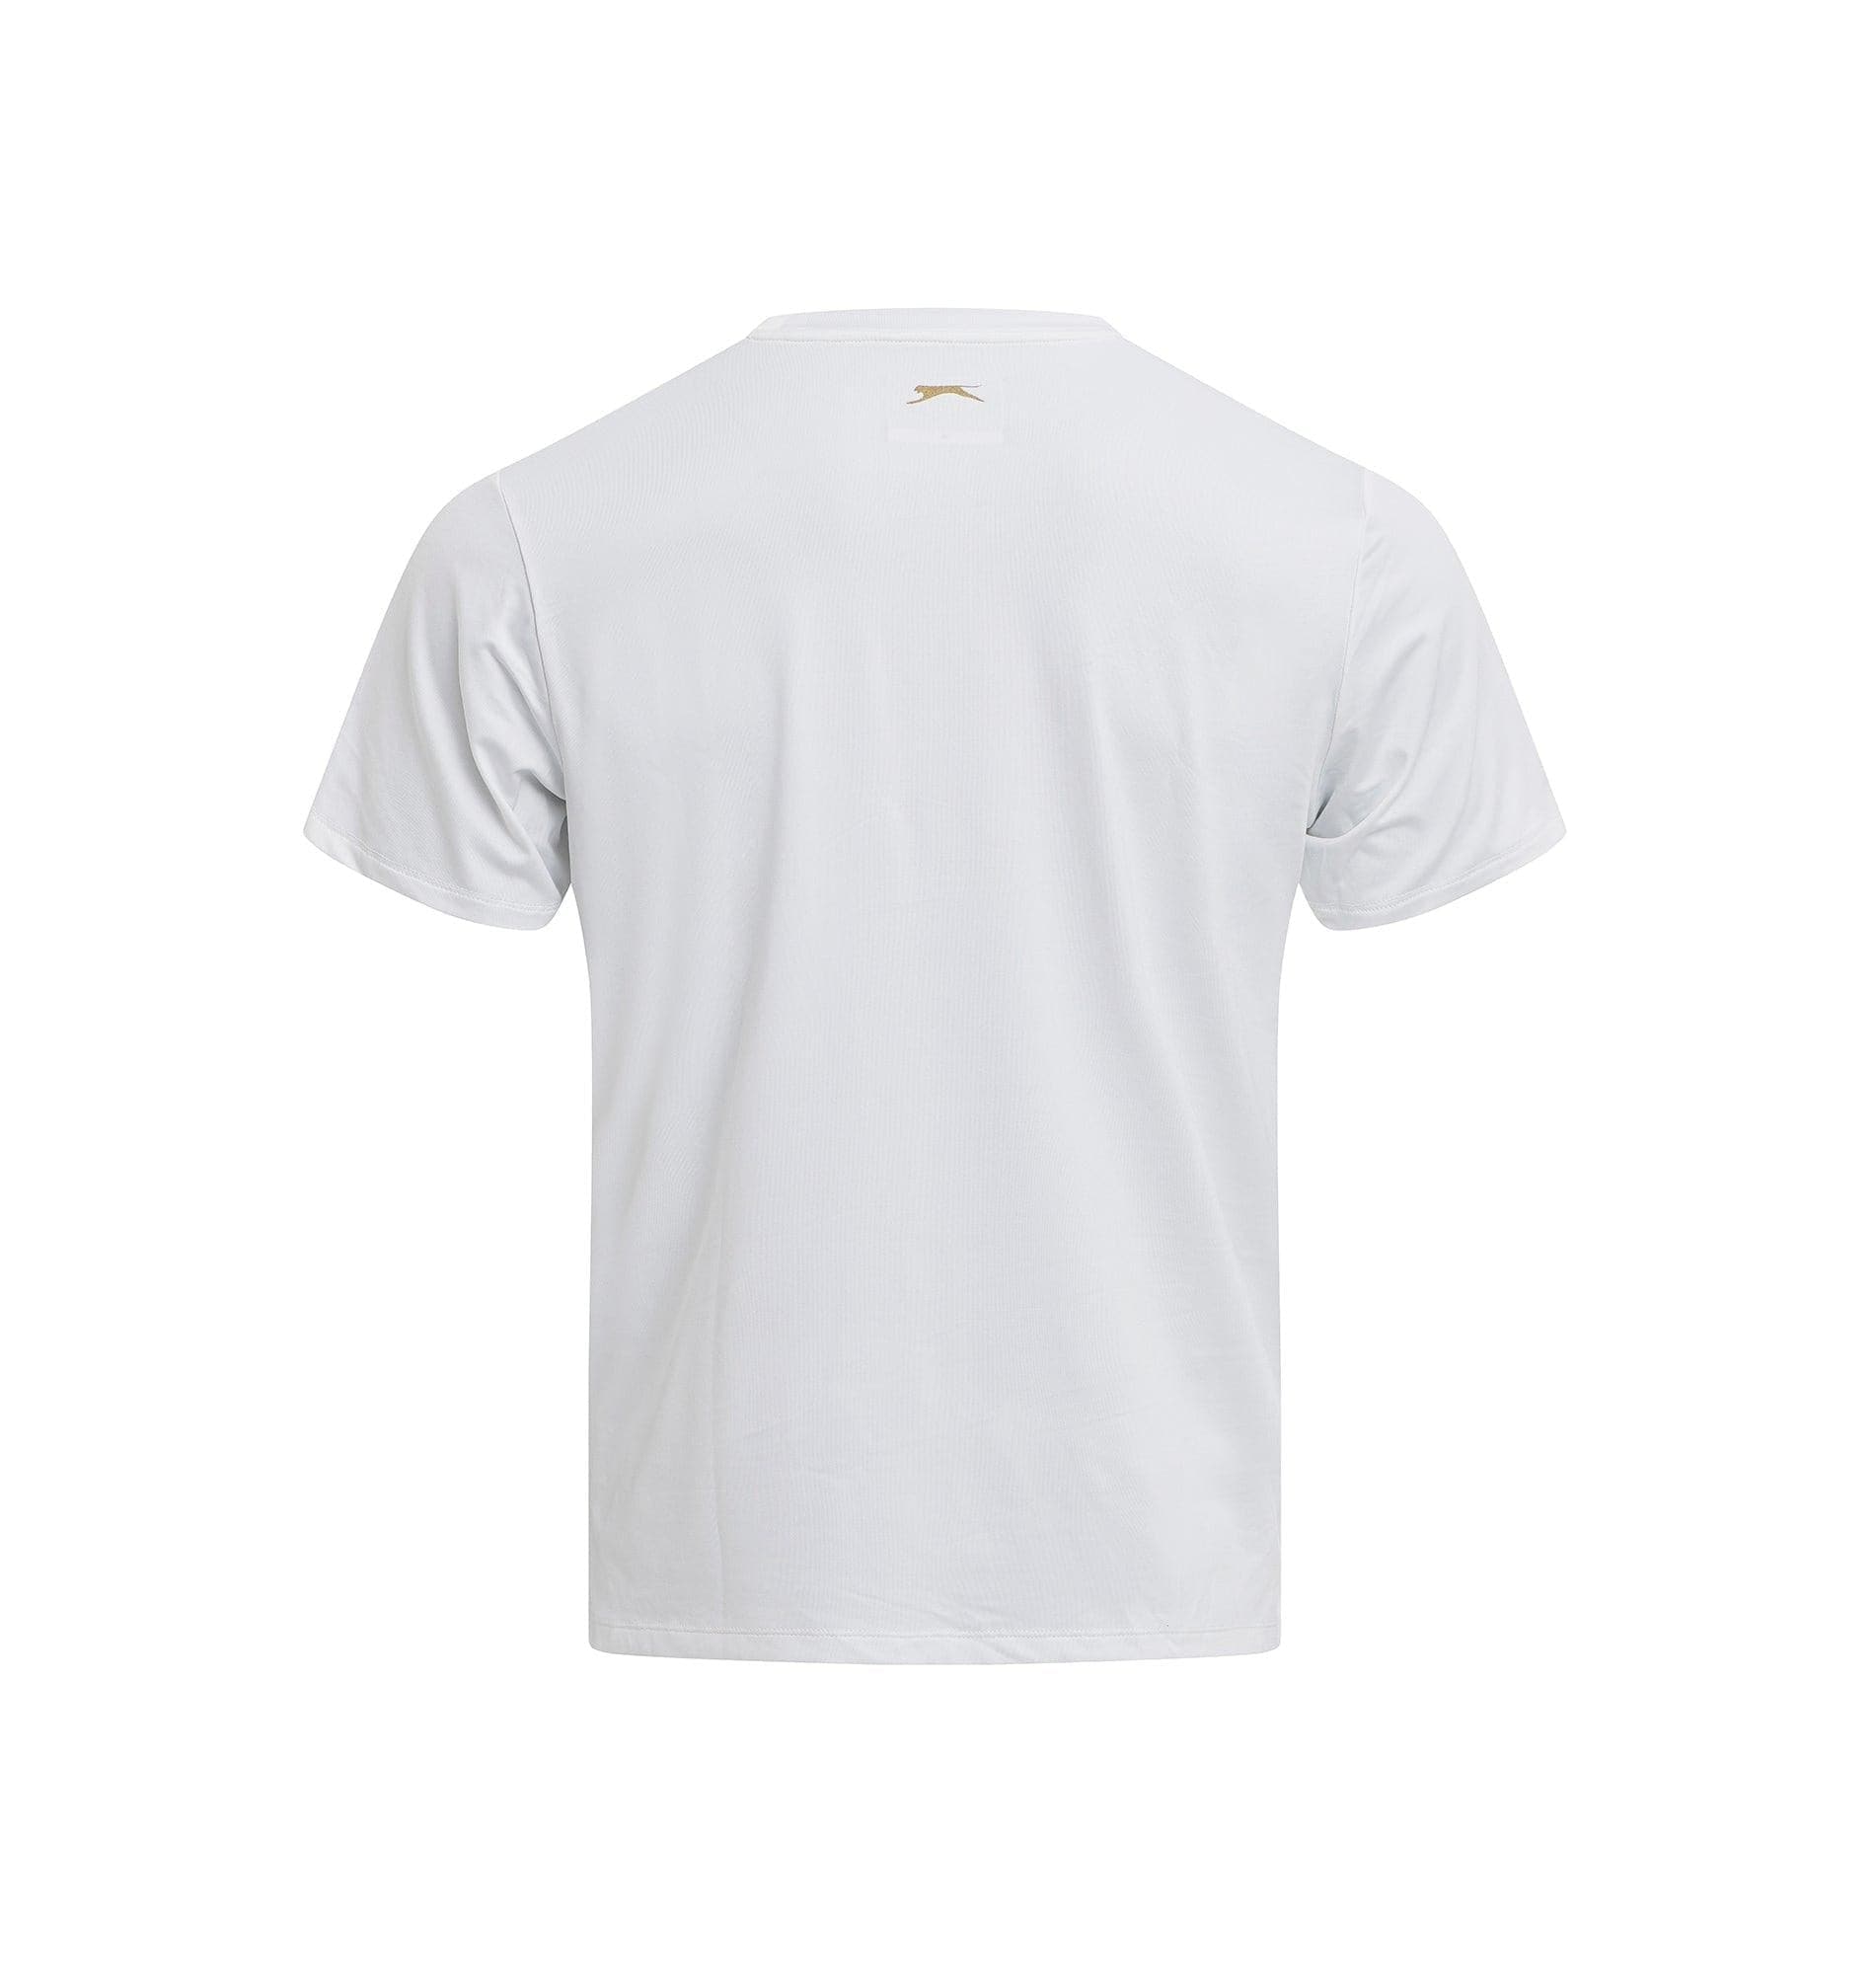 The S Tee White-T-Shirts-Padel Corner-Clothing, pfs:label-Coming Soon, Slazenger, T-Shirt